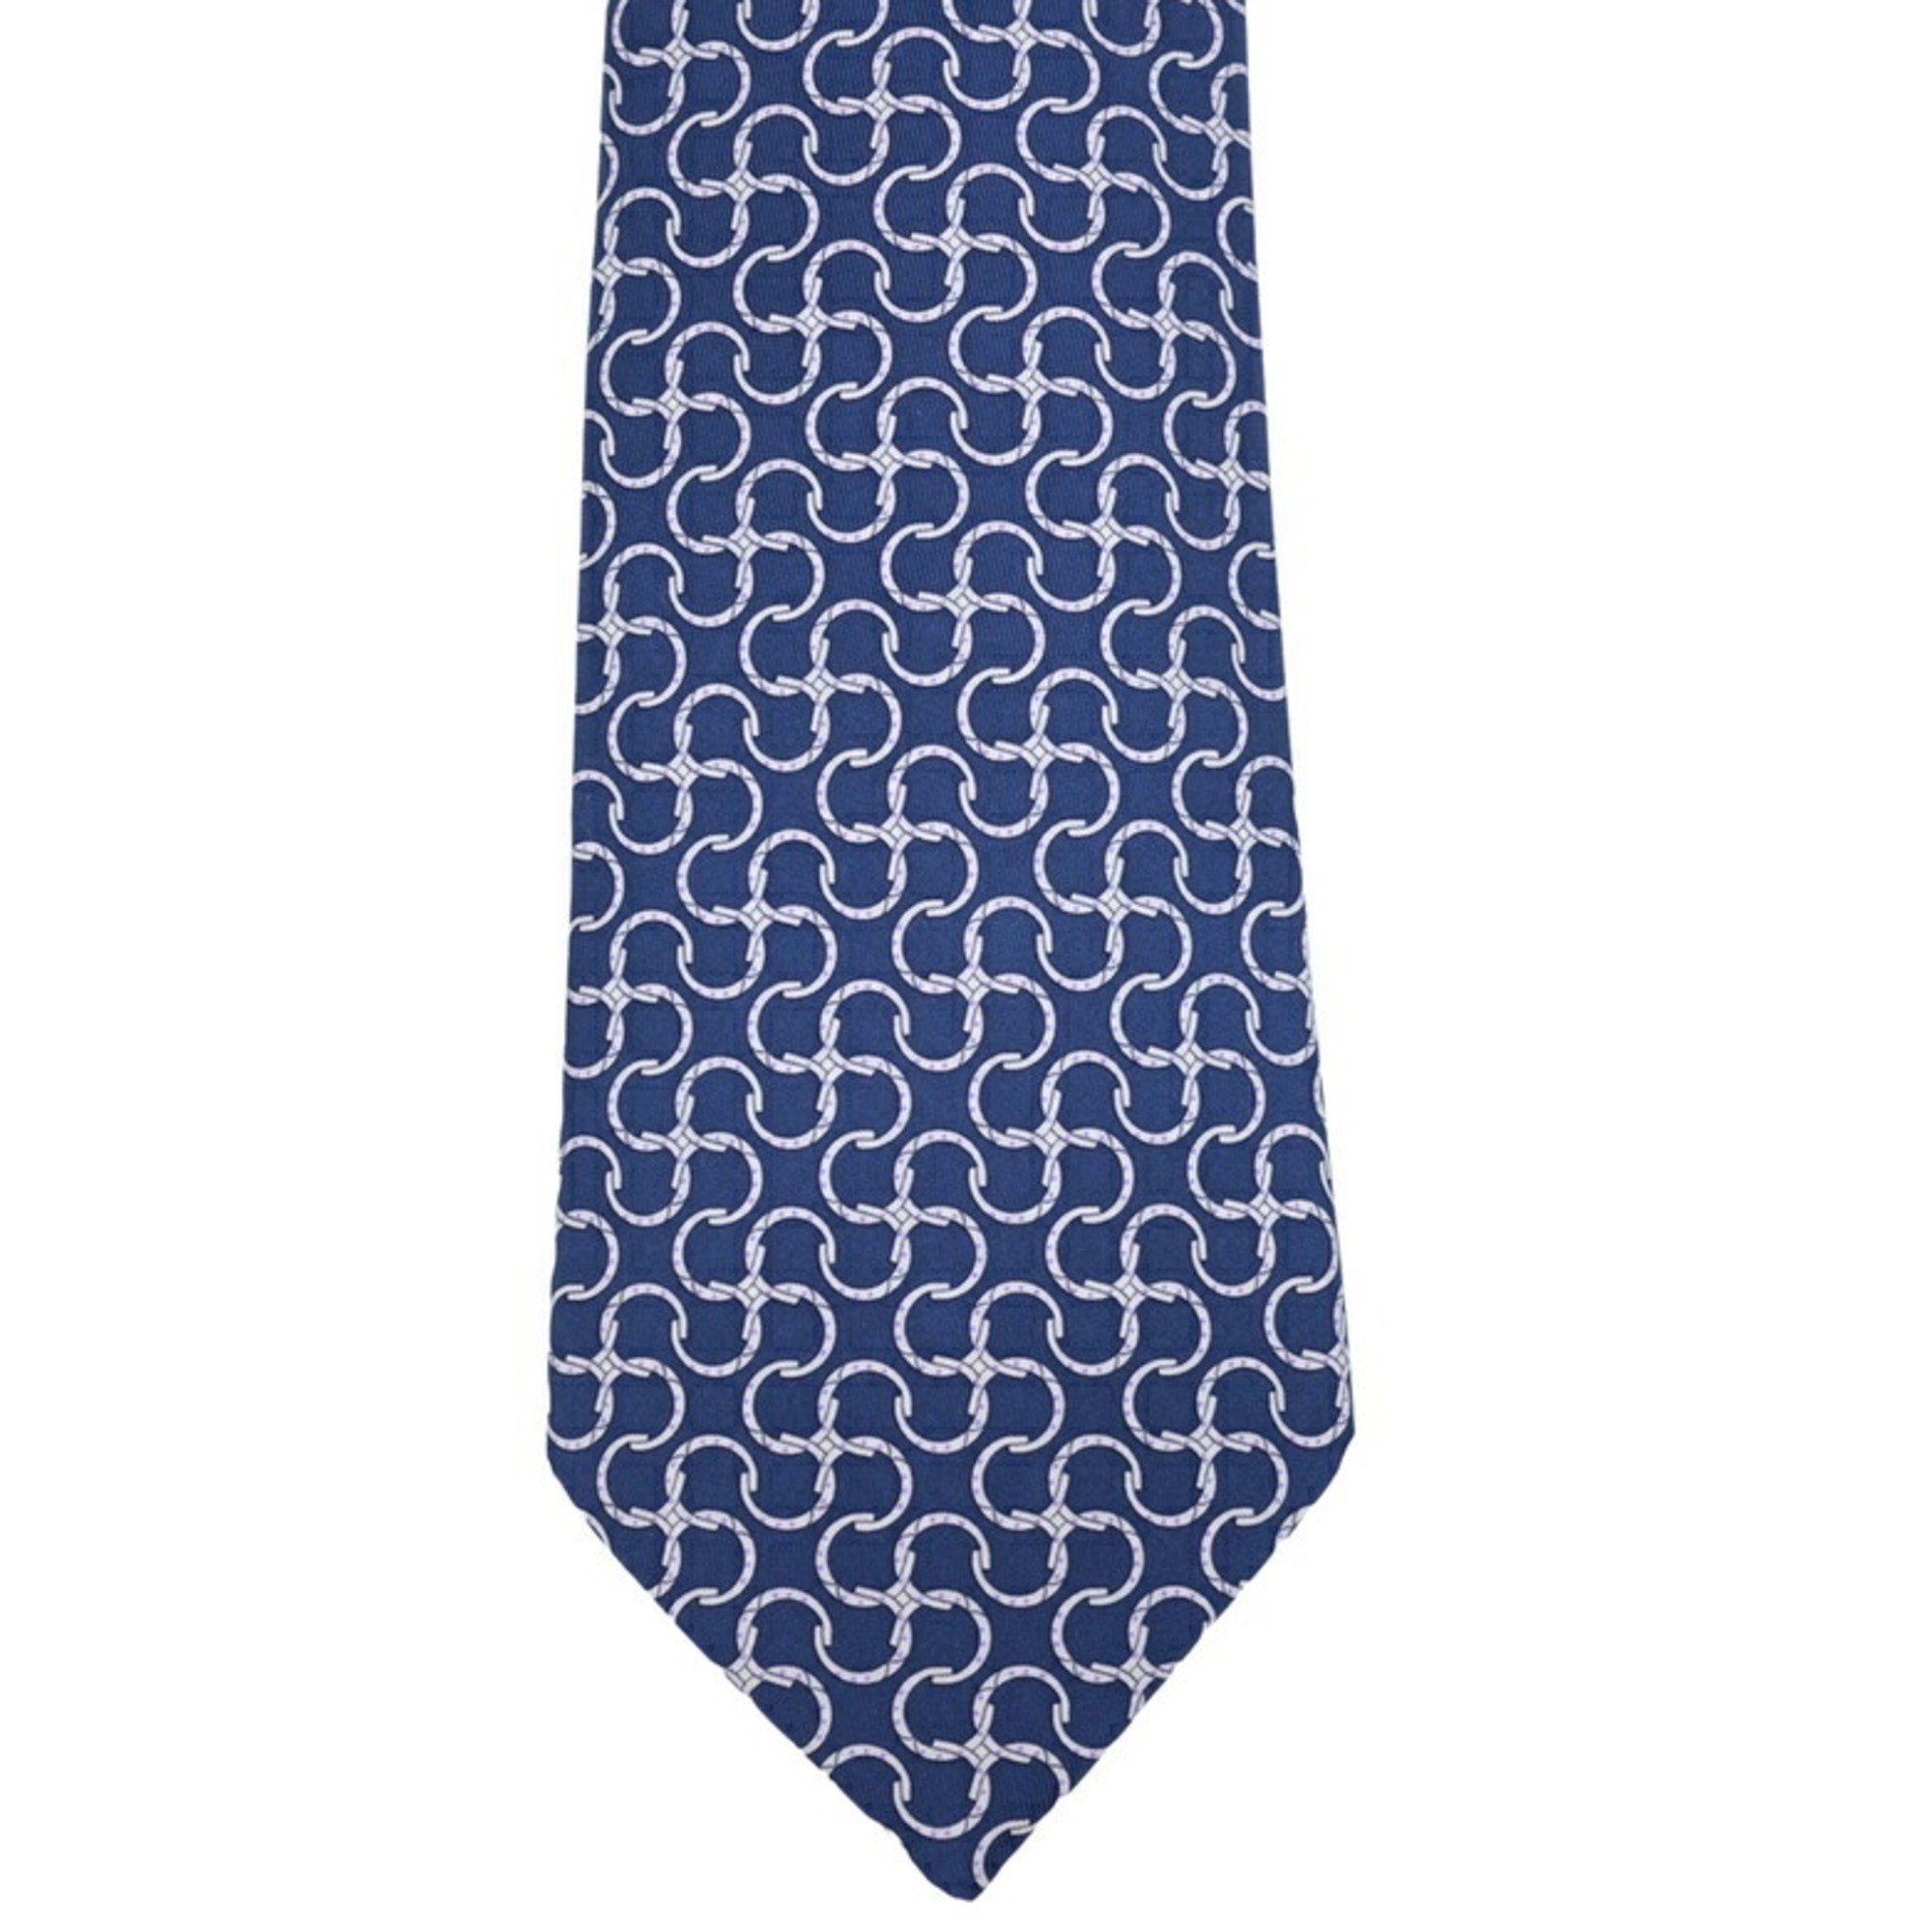 HERMES 5245SA tie, 100% silk, horseshoe pattern, blue